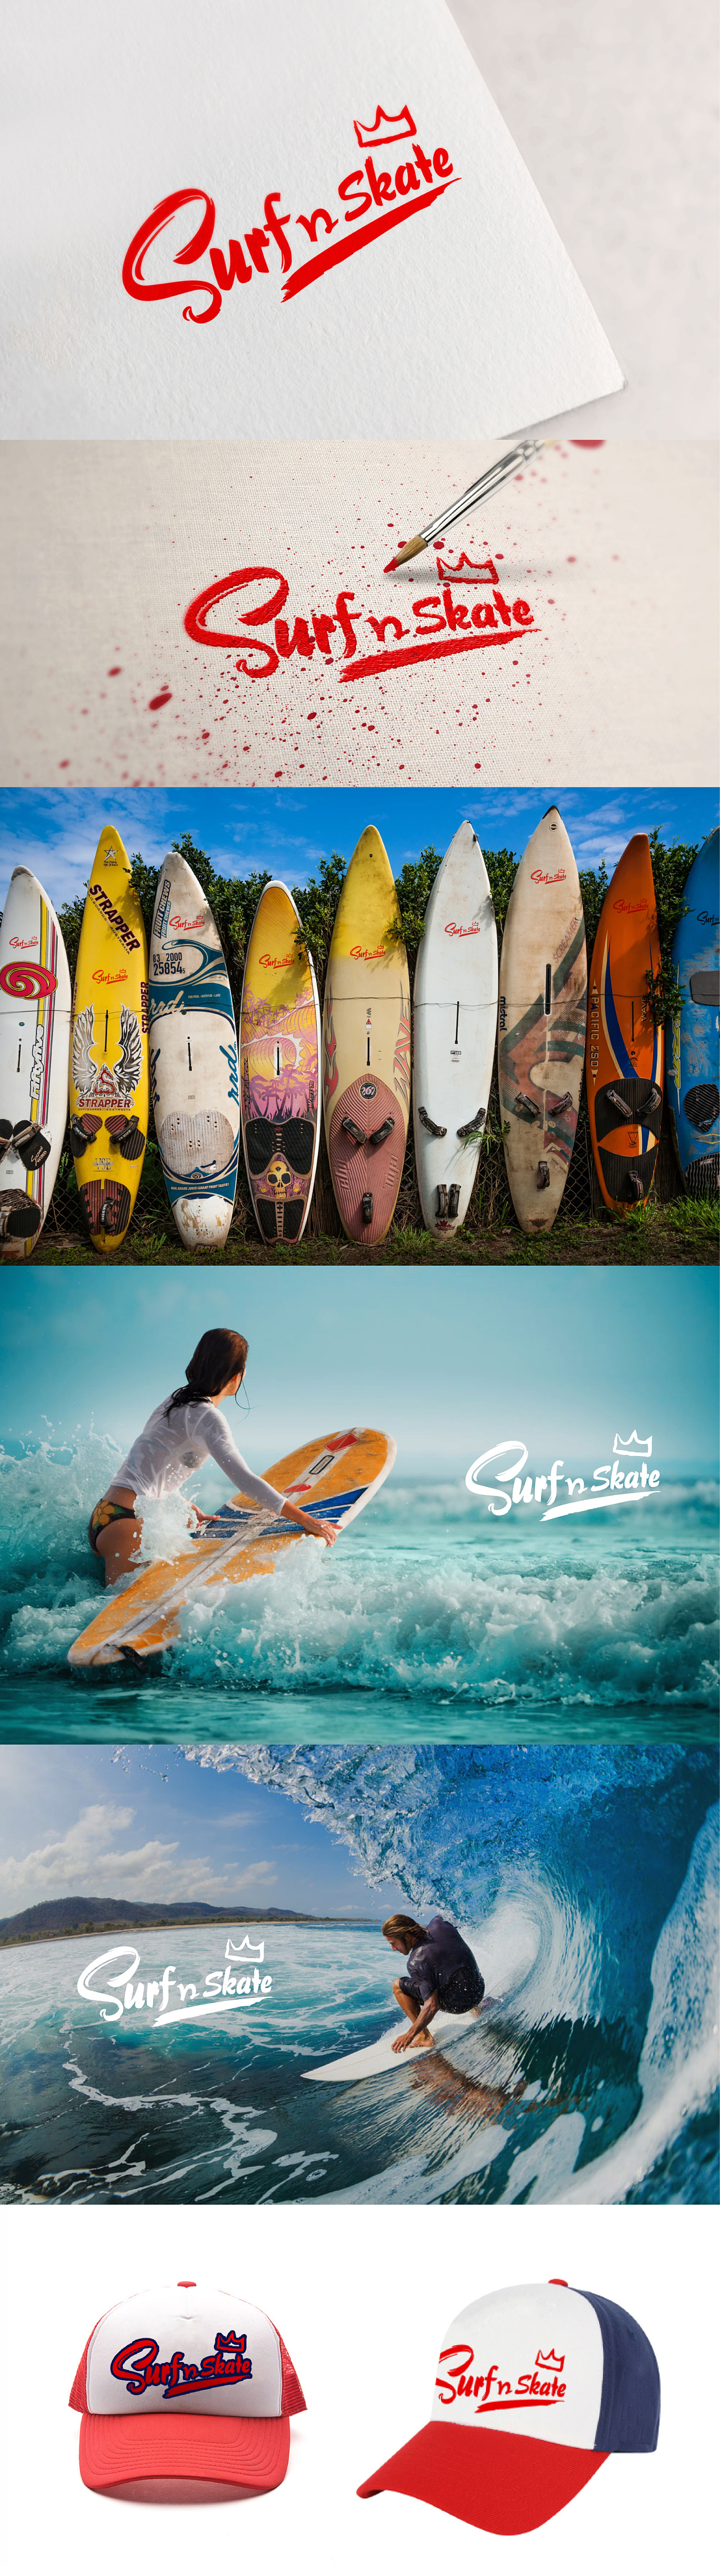 surfboarding图片